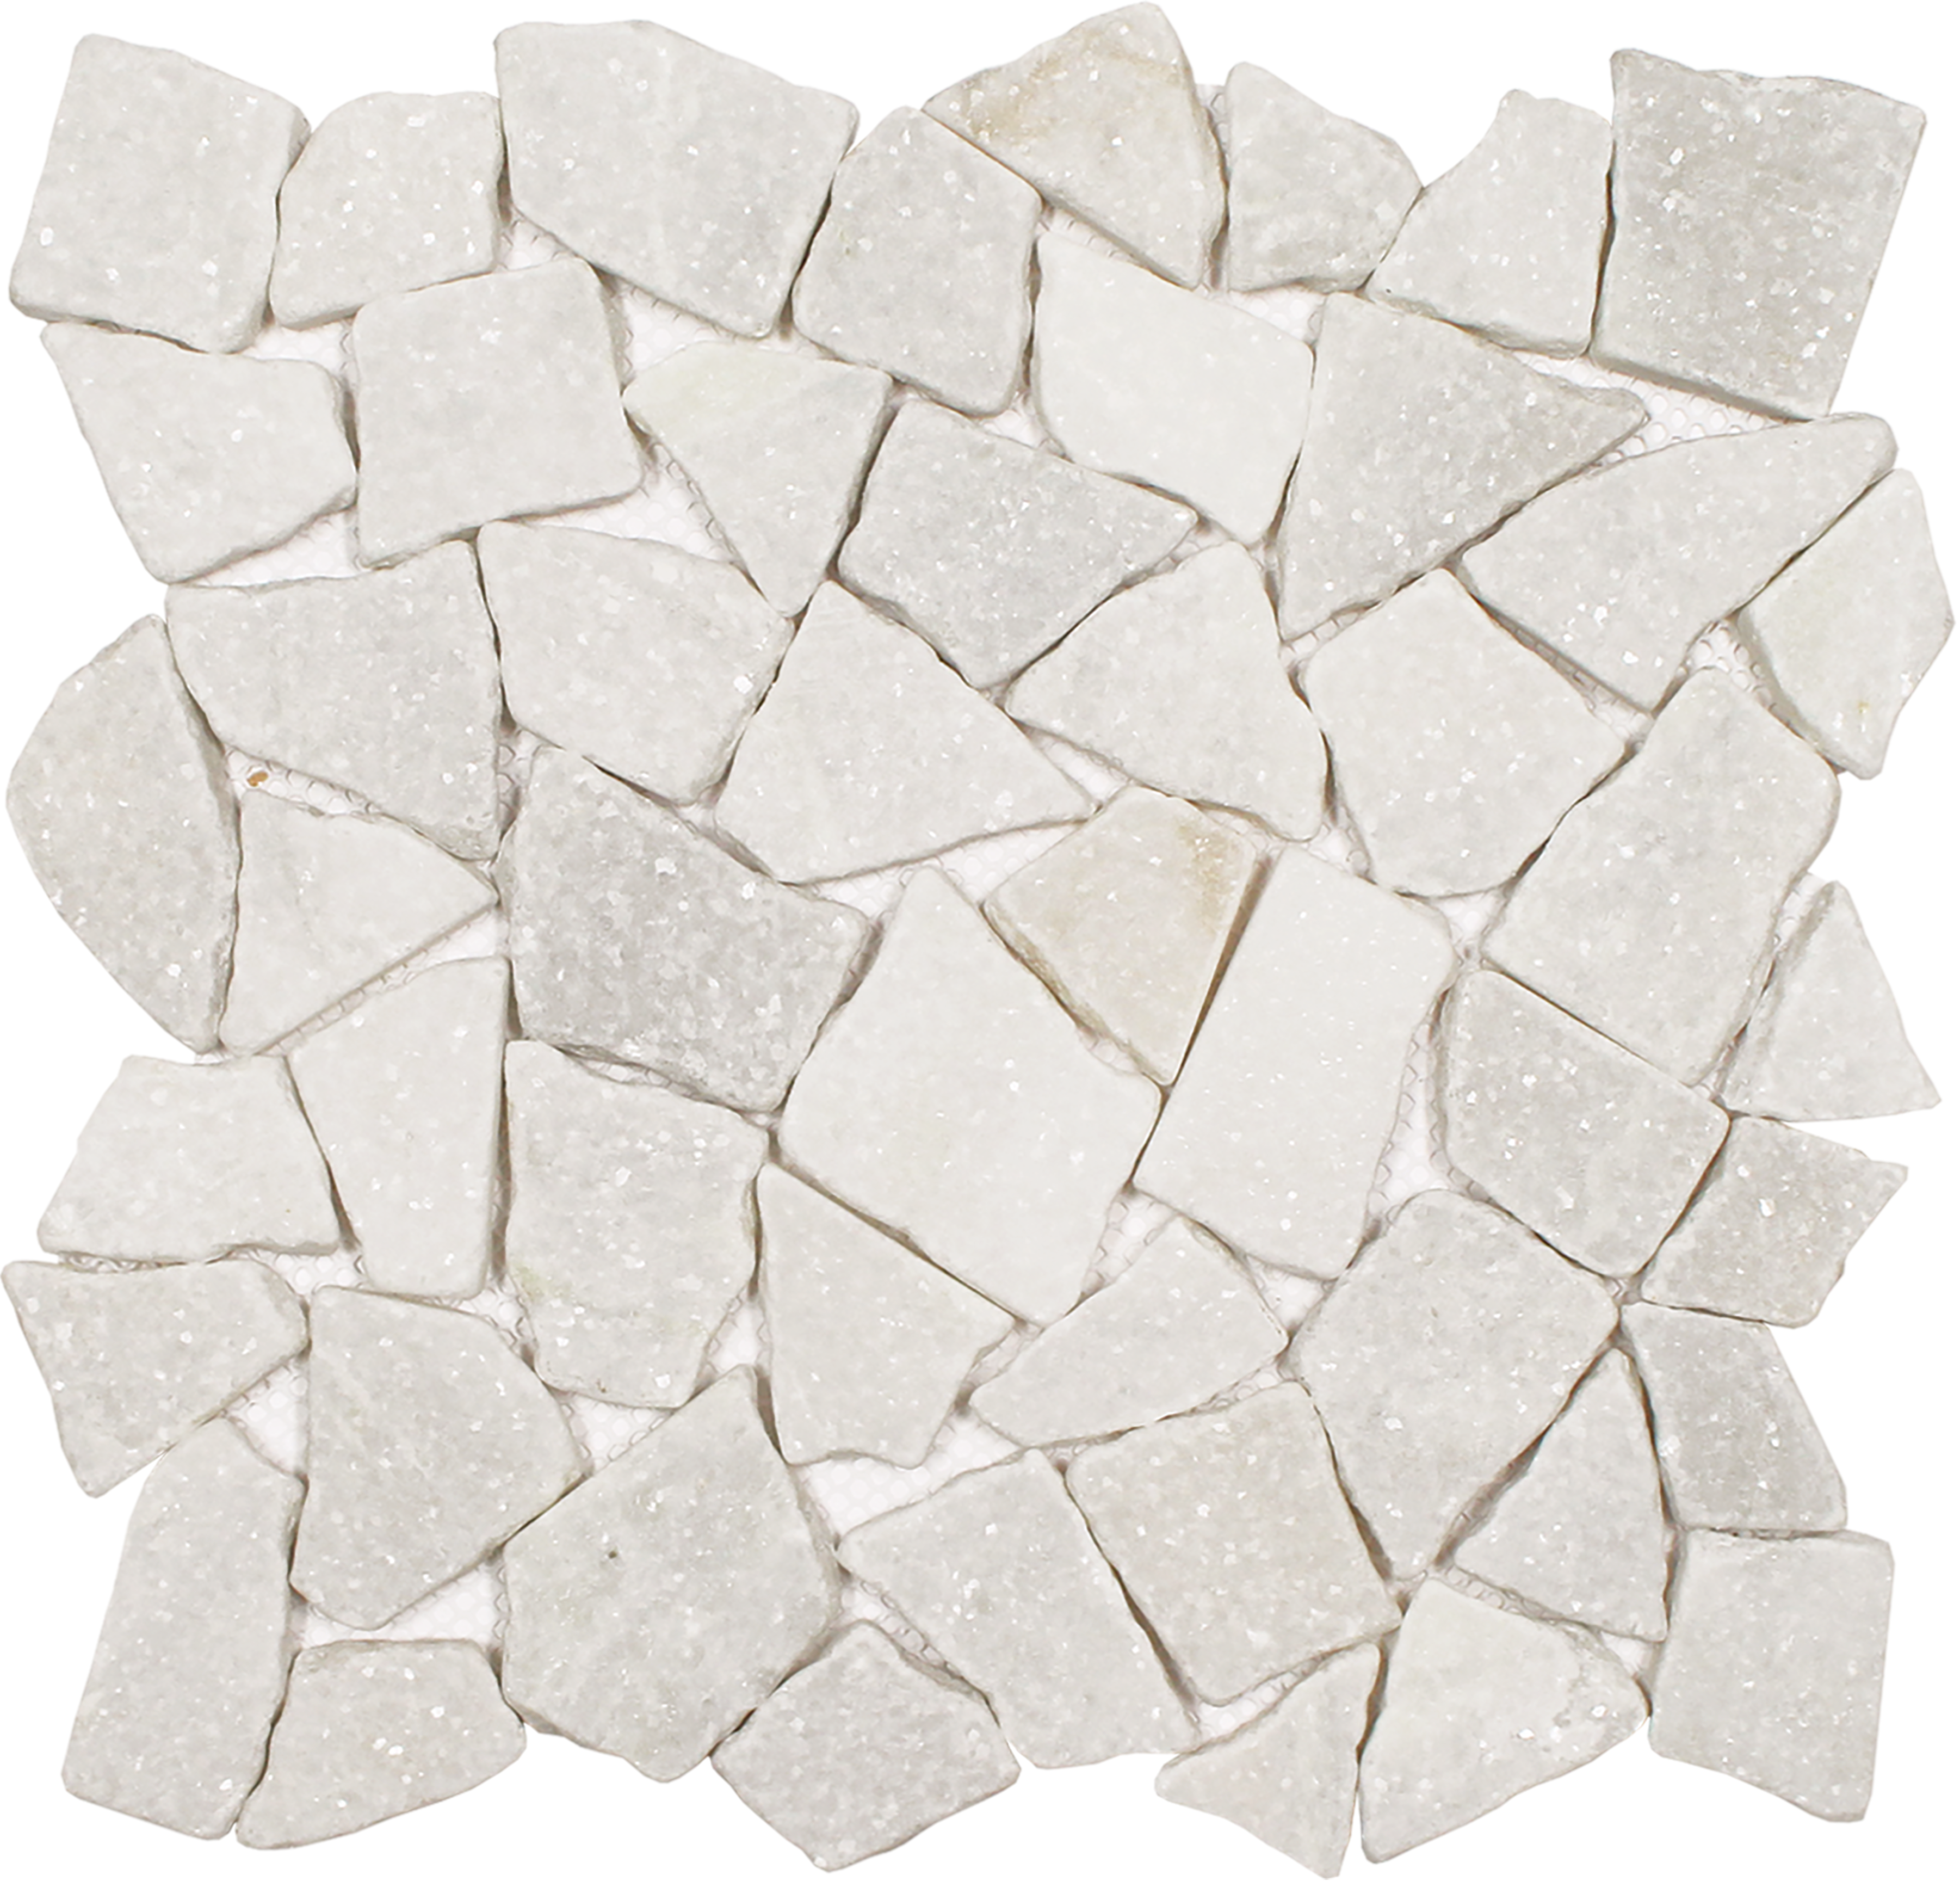 WEB Ocean Stones Fit Sparkly White